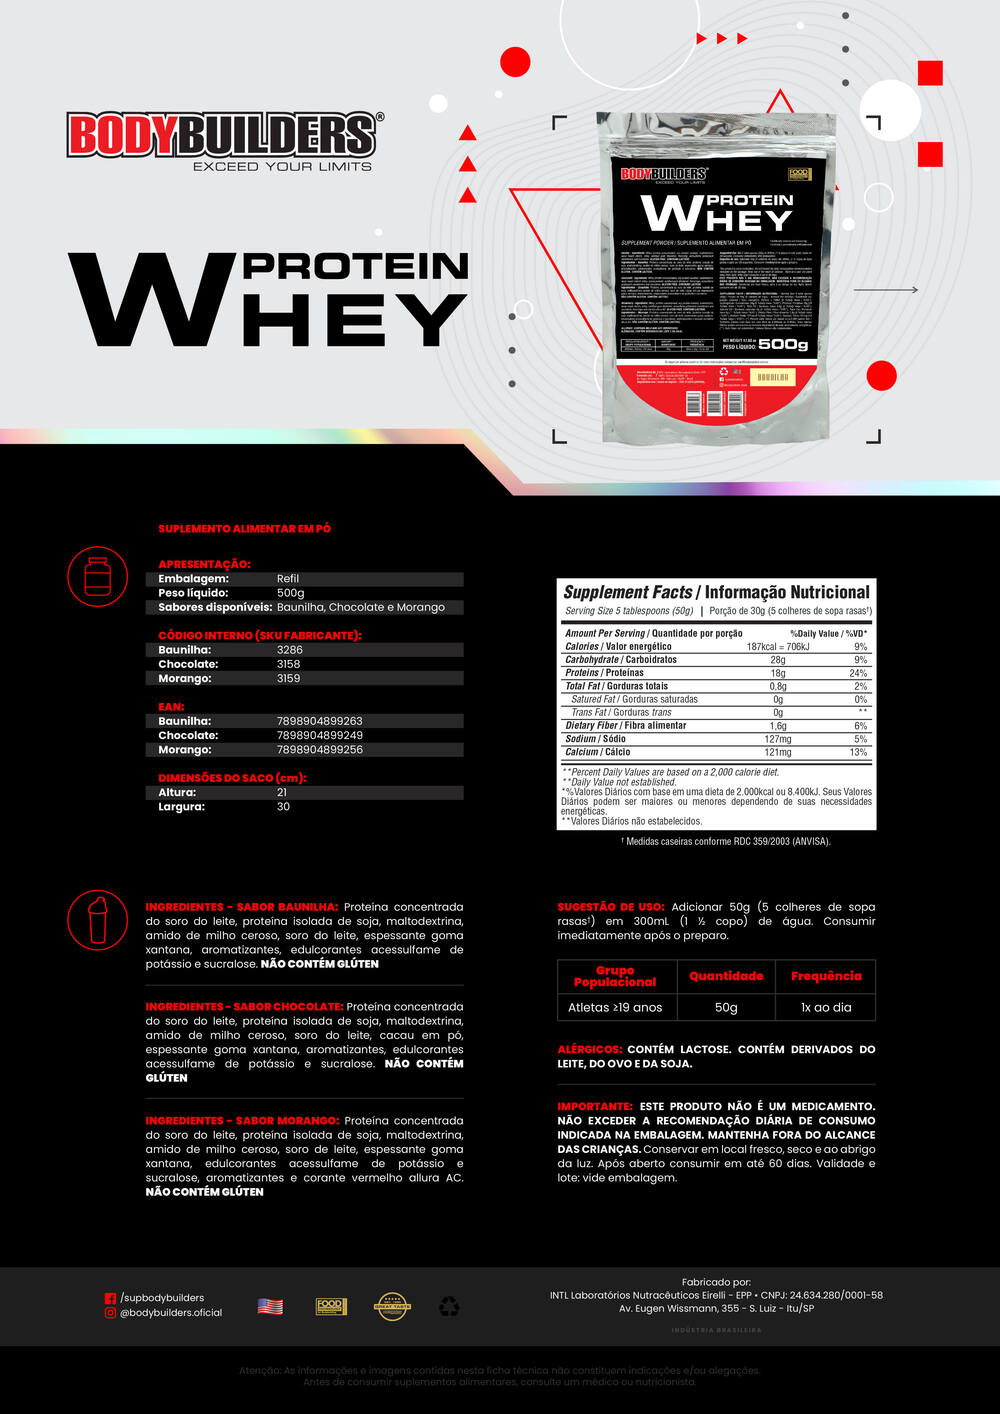 KIT Whey Protein 500g + Power Glutamine 100g + Cocktail Shaker - Bodybuilders